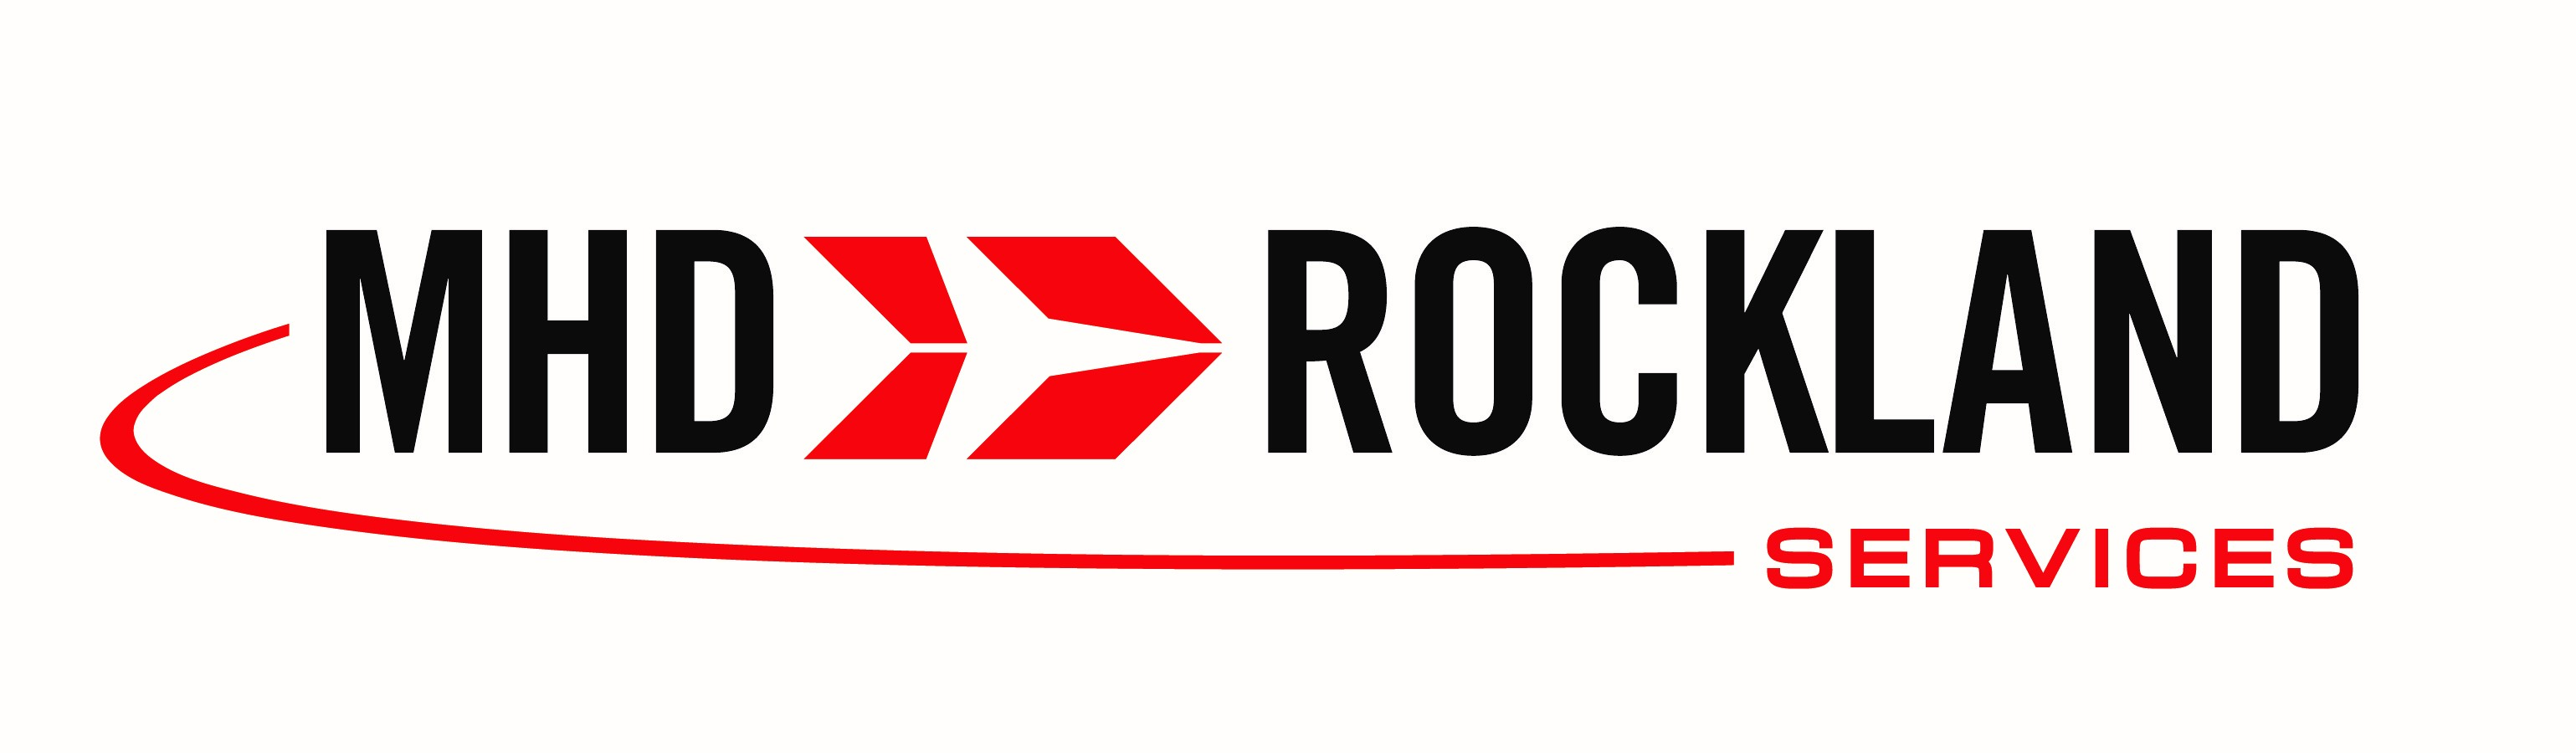 MHD-ROCKLAND Services - logo